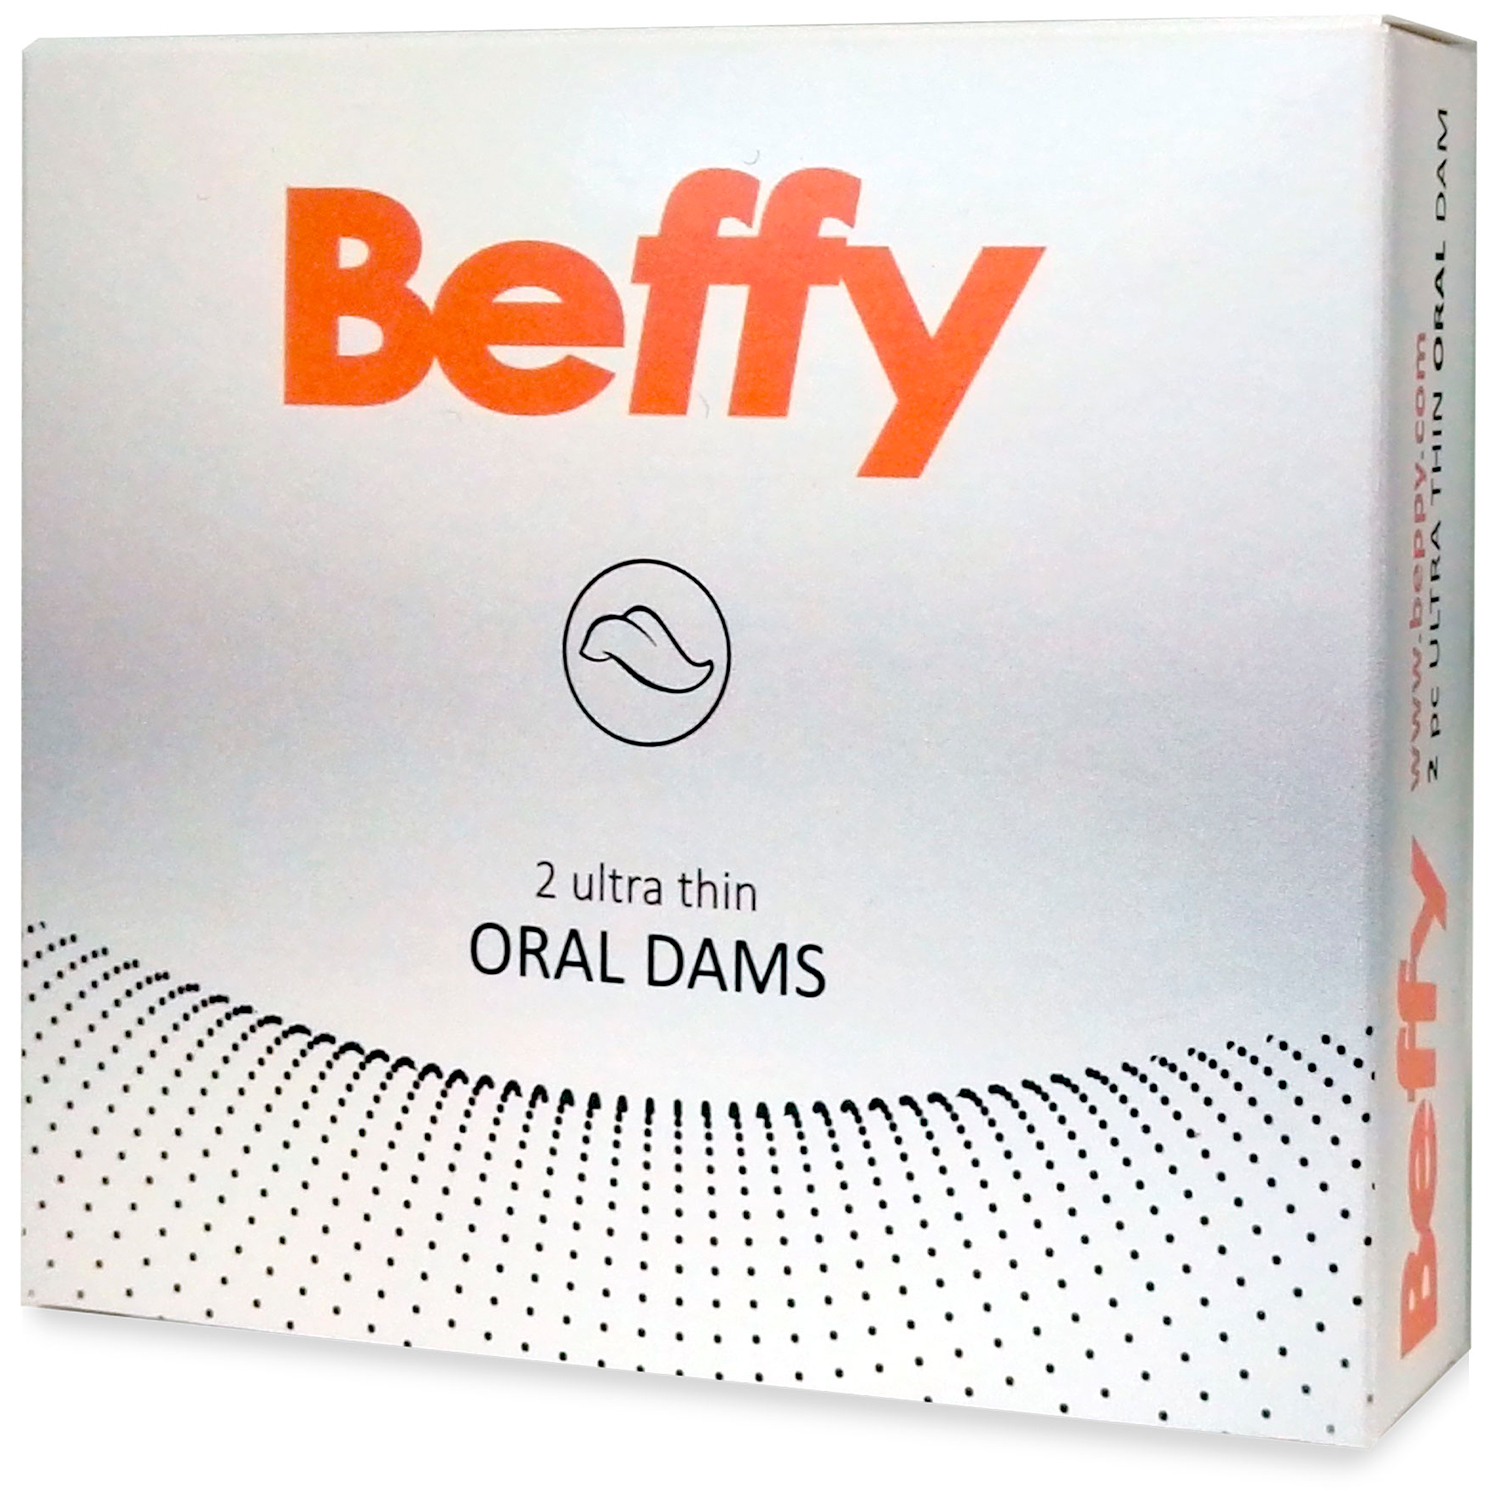 Beffy Oral Dams Slicklappar - Beppy